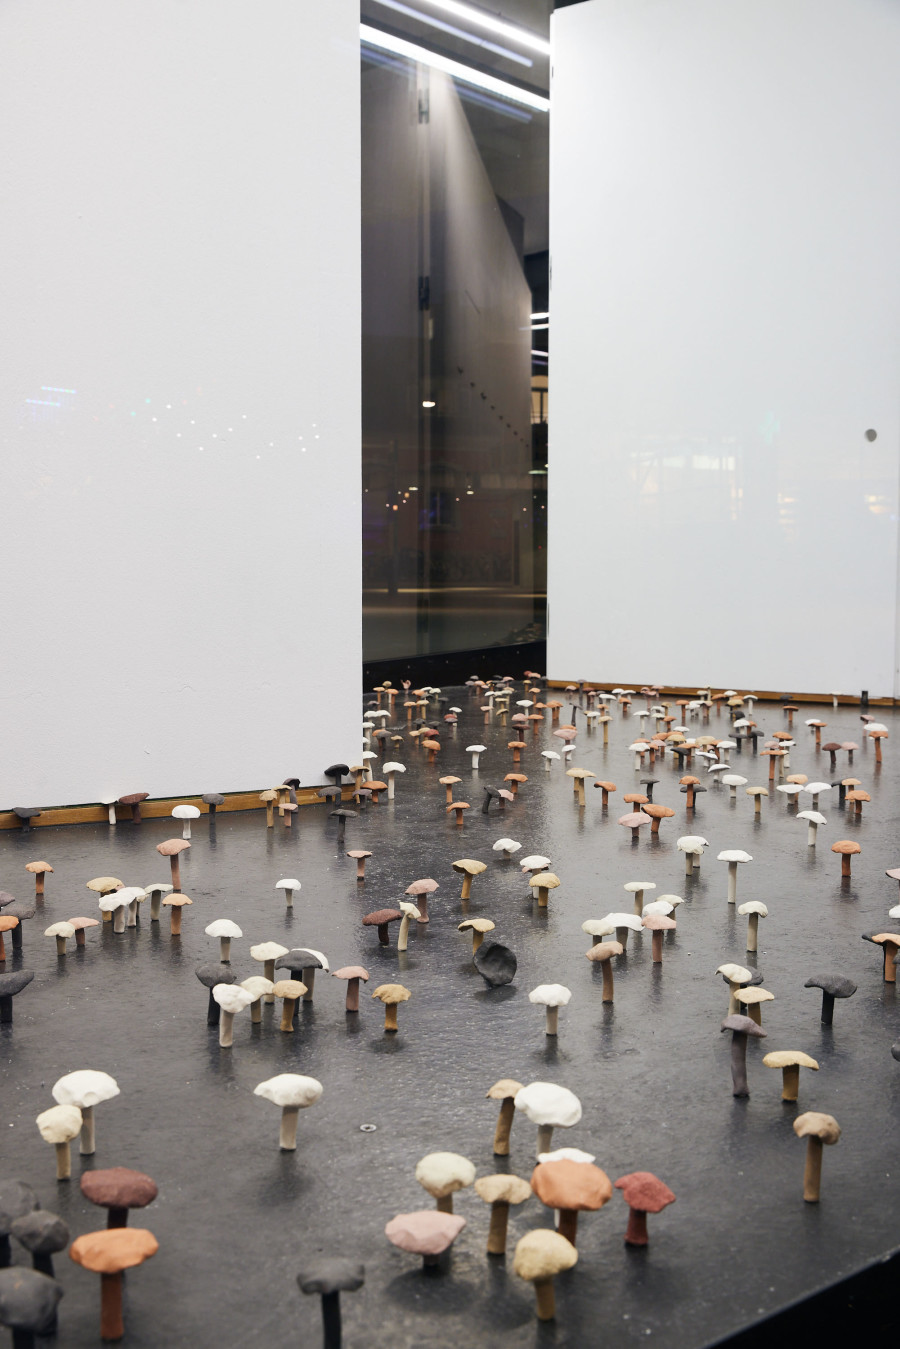 Ishita Chakraborty, Europa, 2019 - 2023. Fired, un-glazed ceramic installation. Dimensions variable. Unique series. Photographer: Moritz Schermbach. Photo credit: Moritz Schermbach. Courtesy of the artist and VITRINE London/Basel.